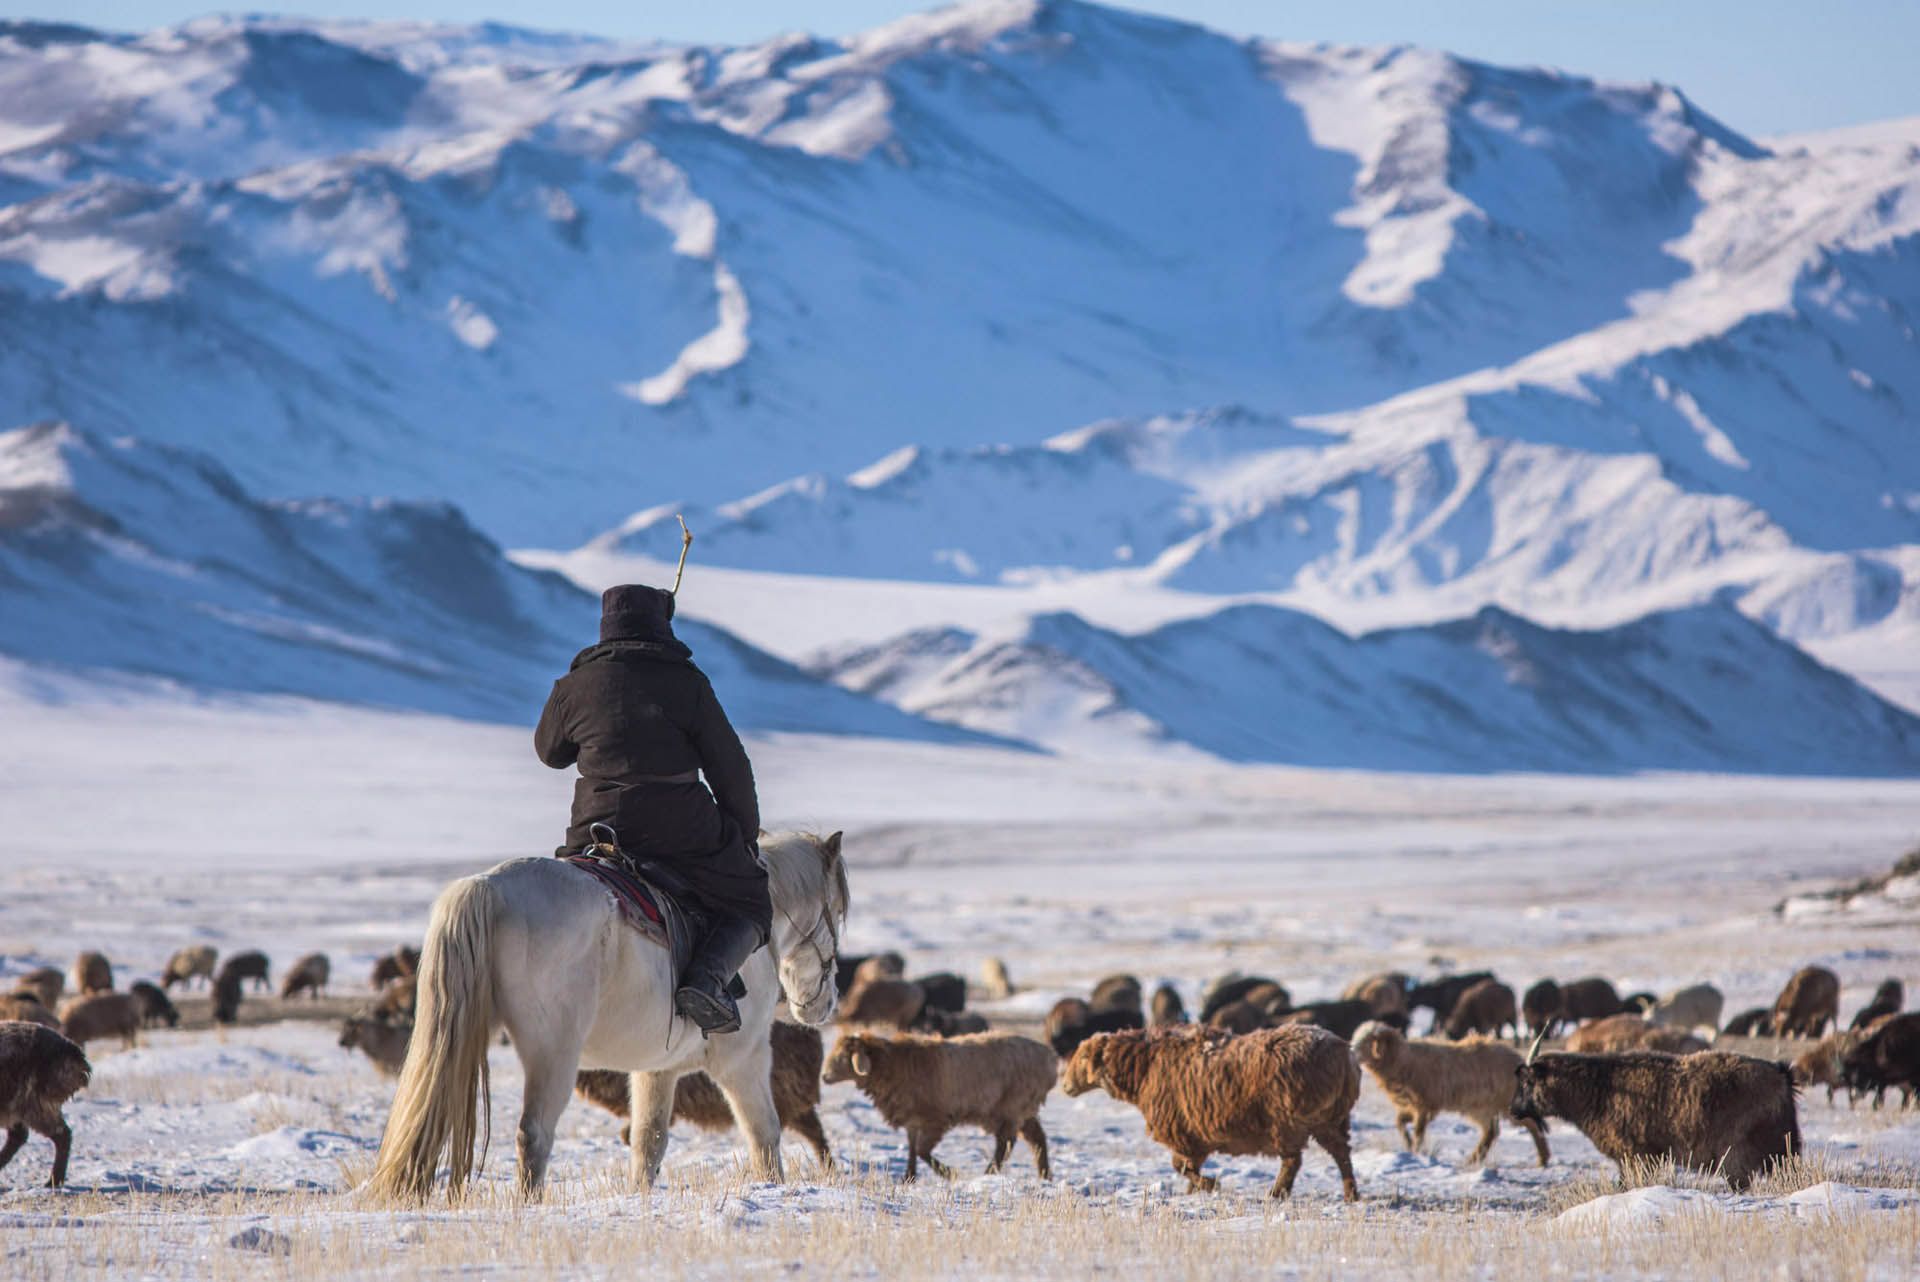 Winter tours to Mongolia